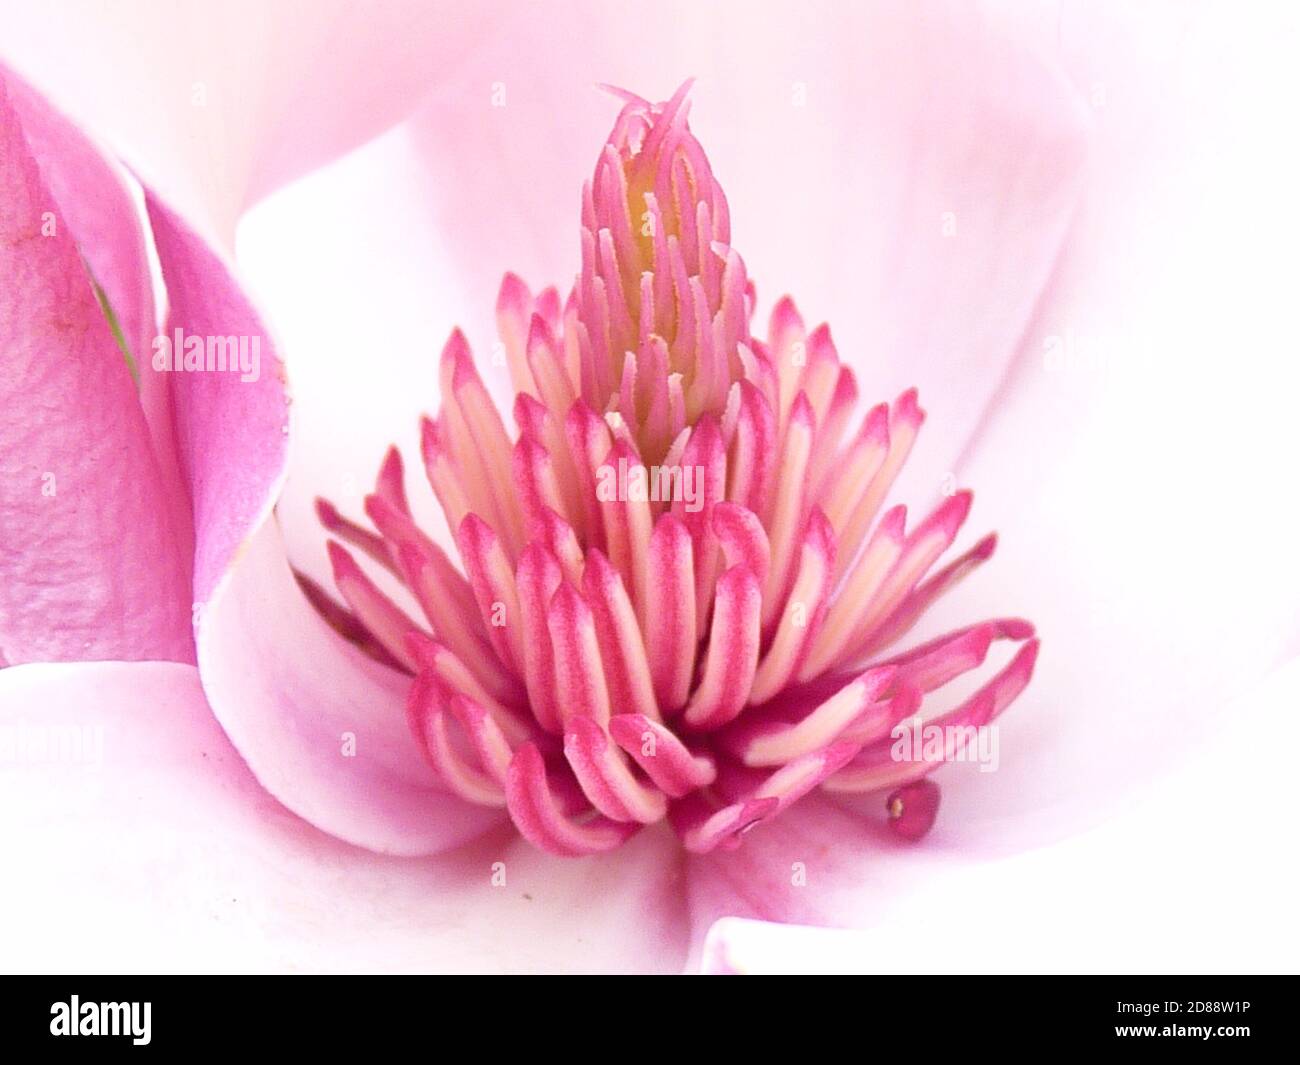 Macro shot of stamen of pink lily magnolia flower Stock Photo